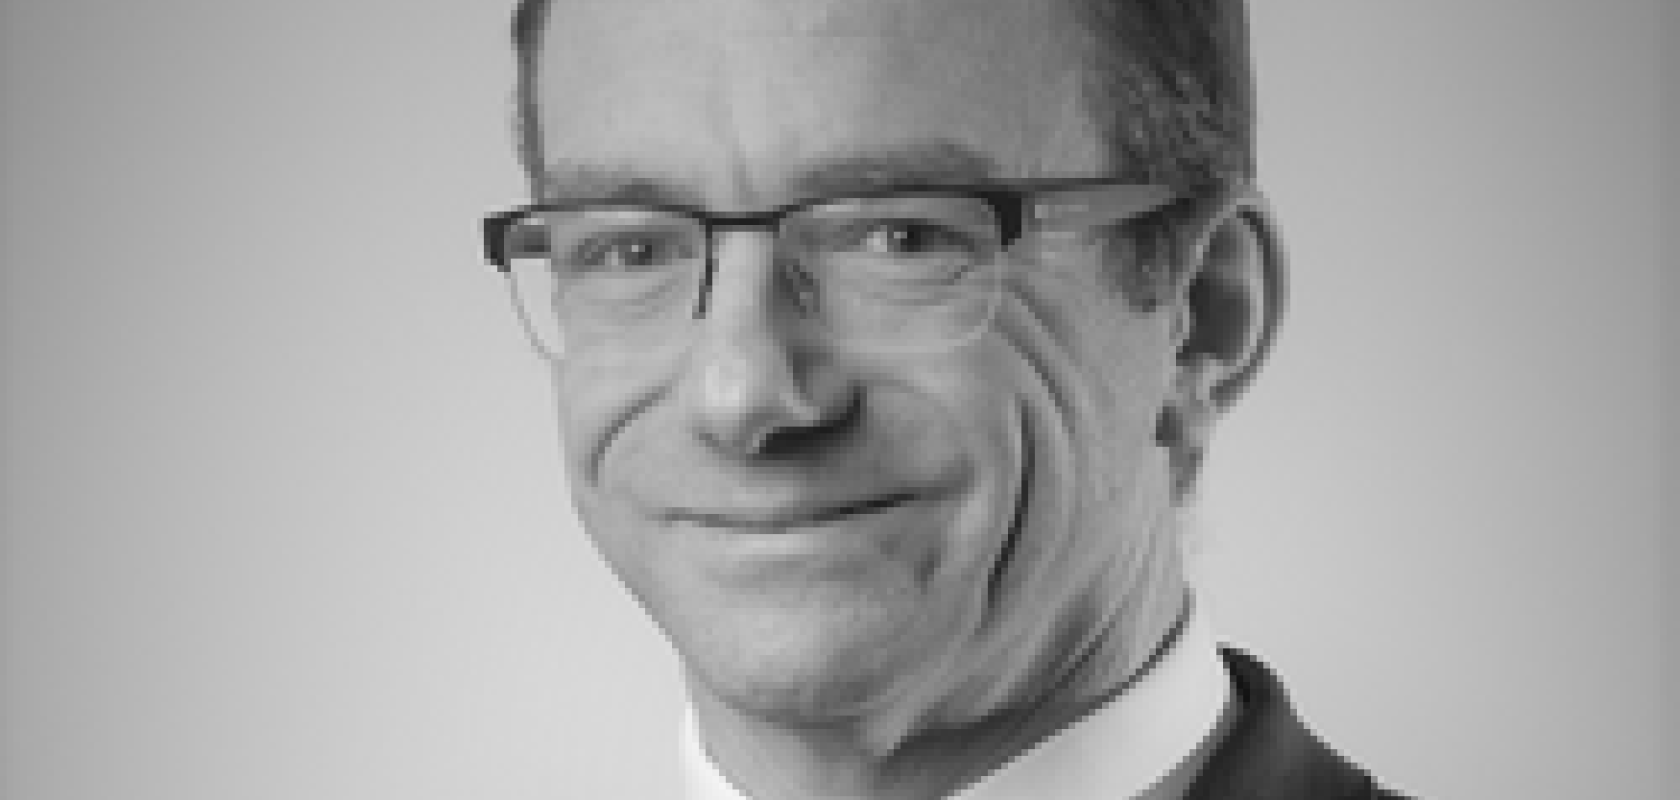 Simon Andrews, Executive director, Fraunhofer UK Research Ltd